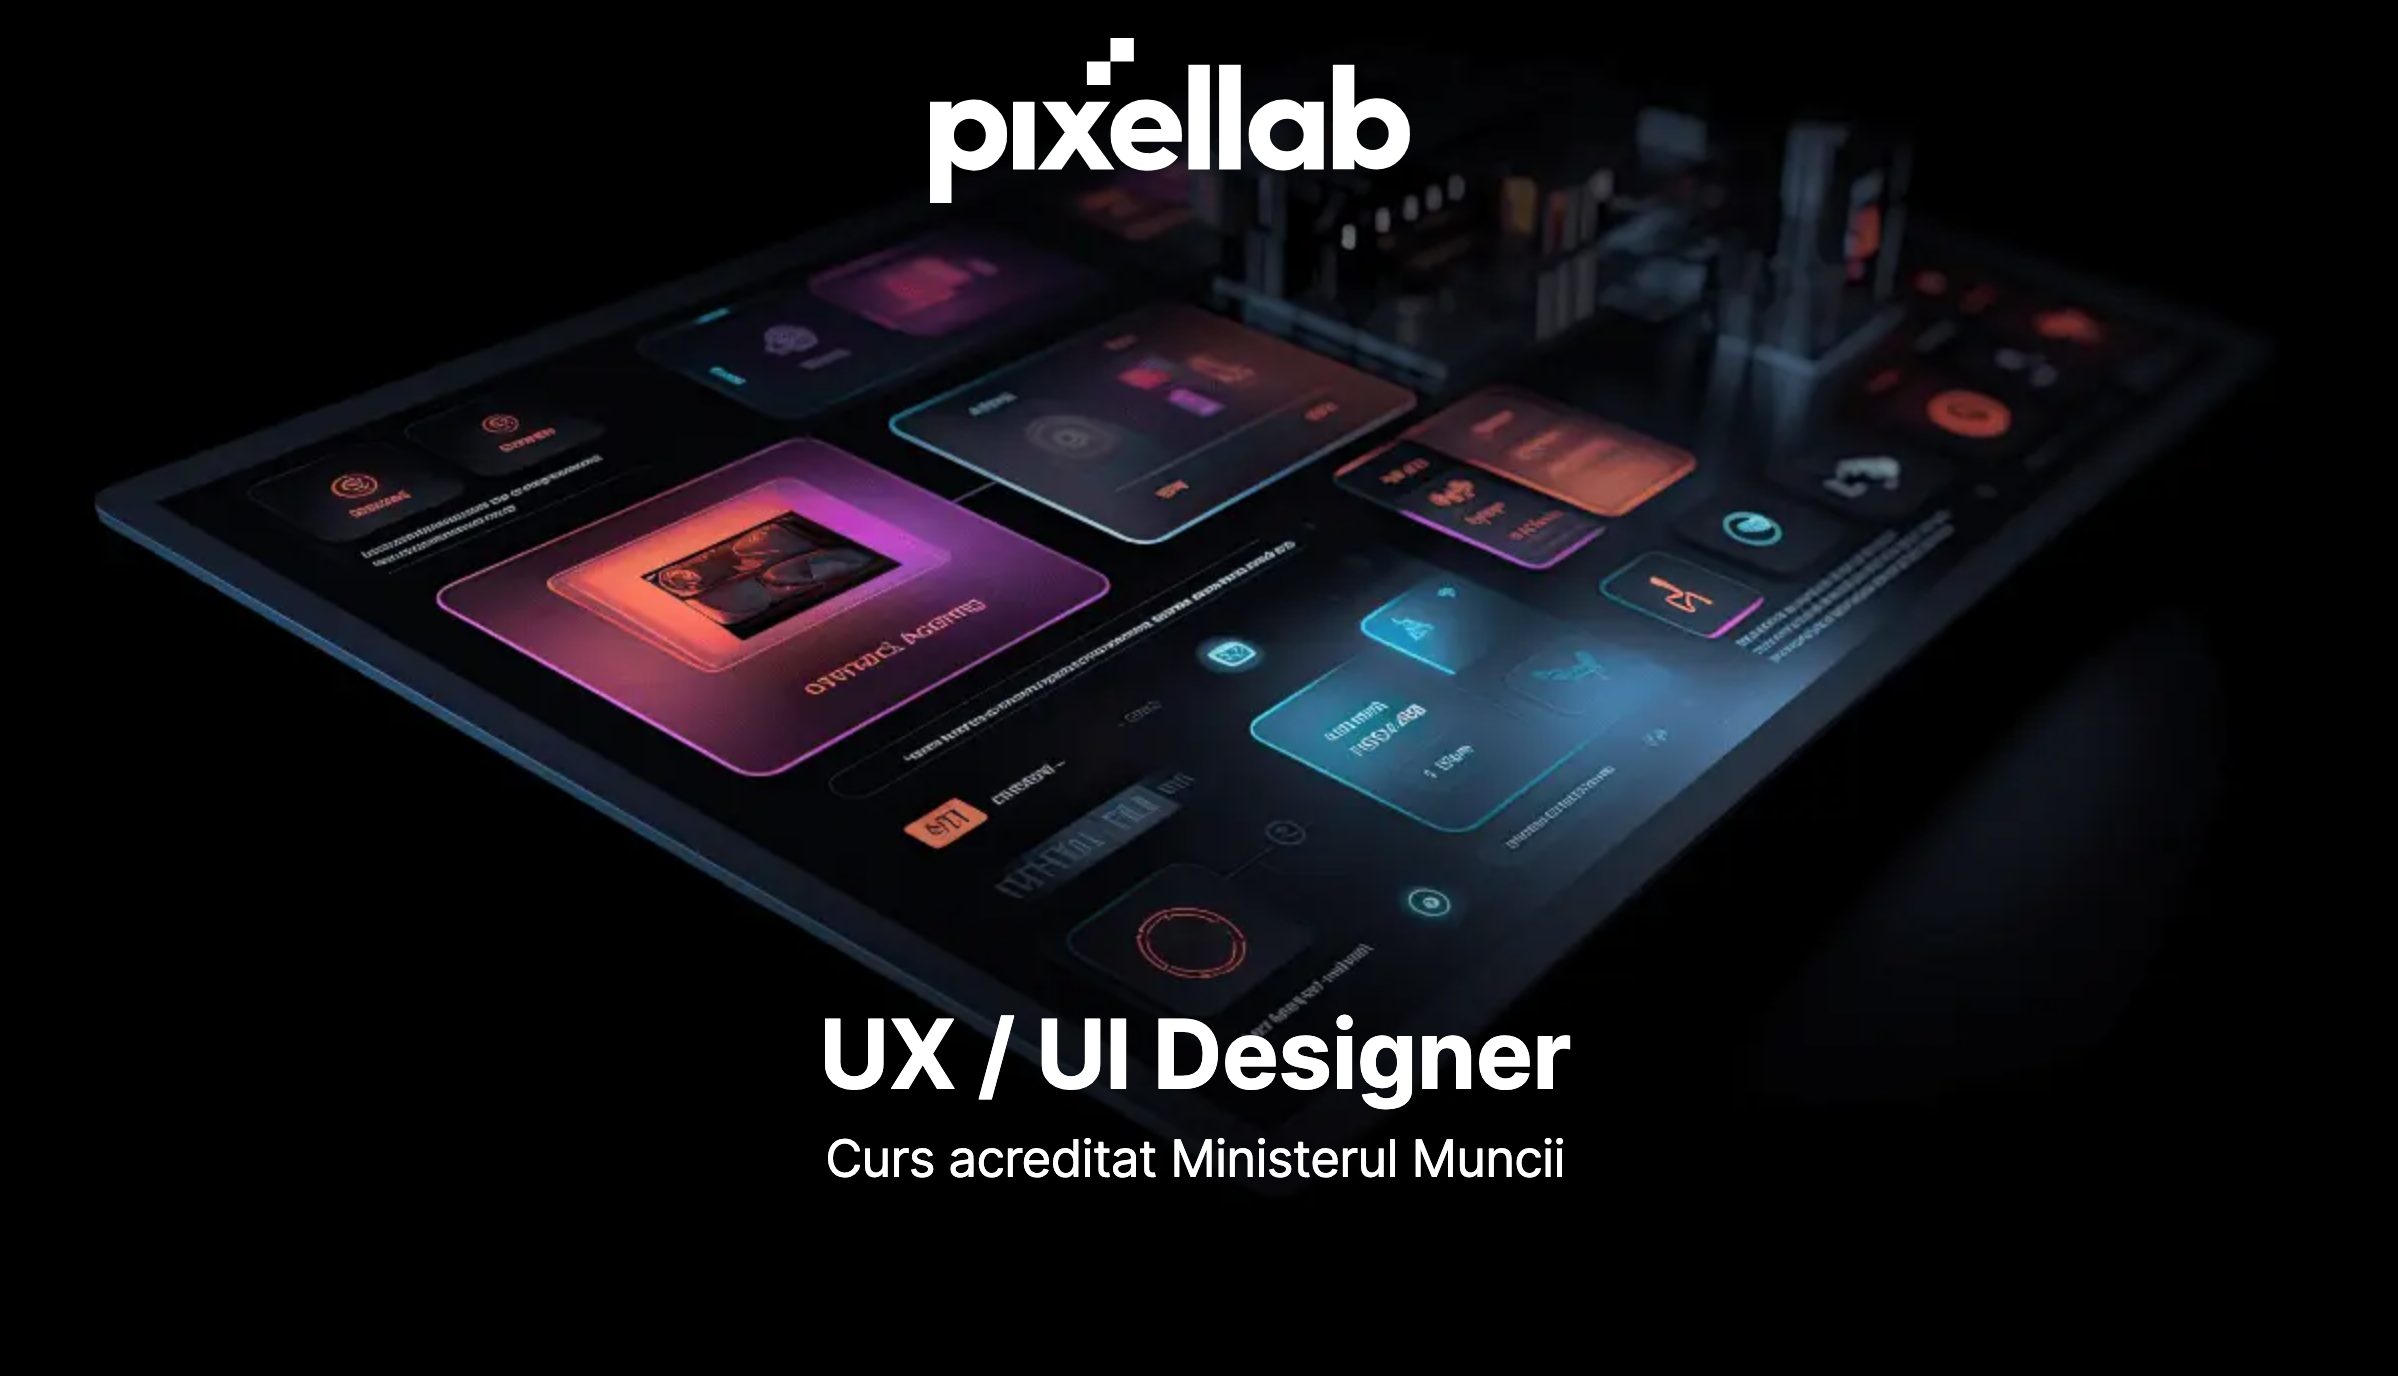 UX/UI Designer Learning Path